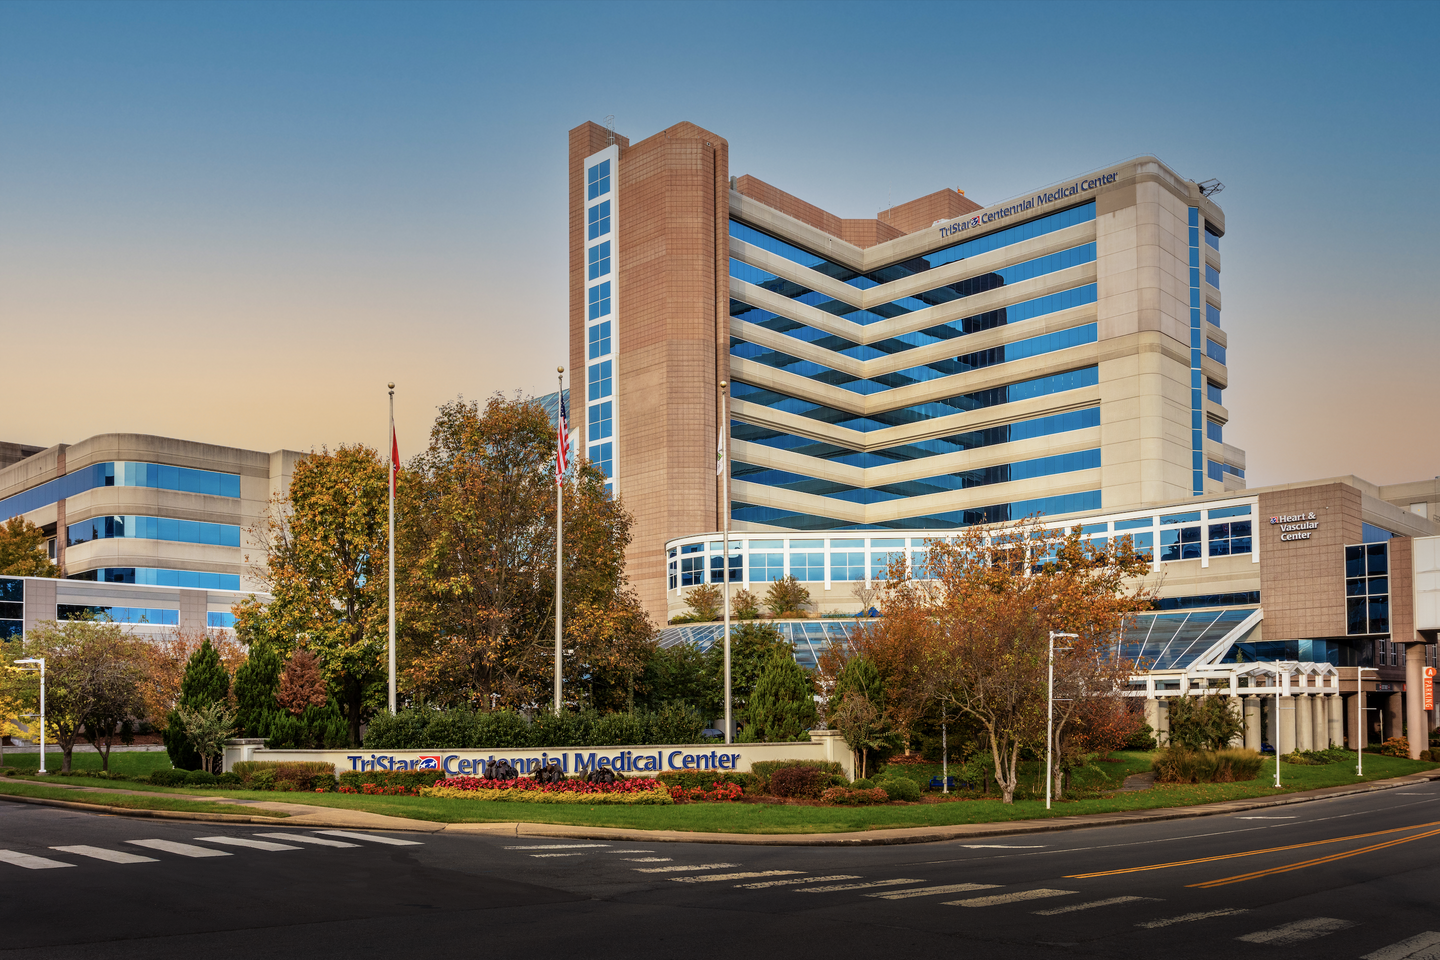 Exterior view of TriStar Centennial Medical Center